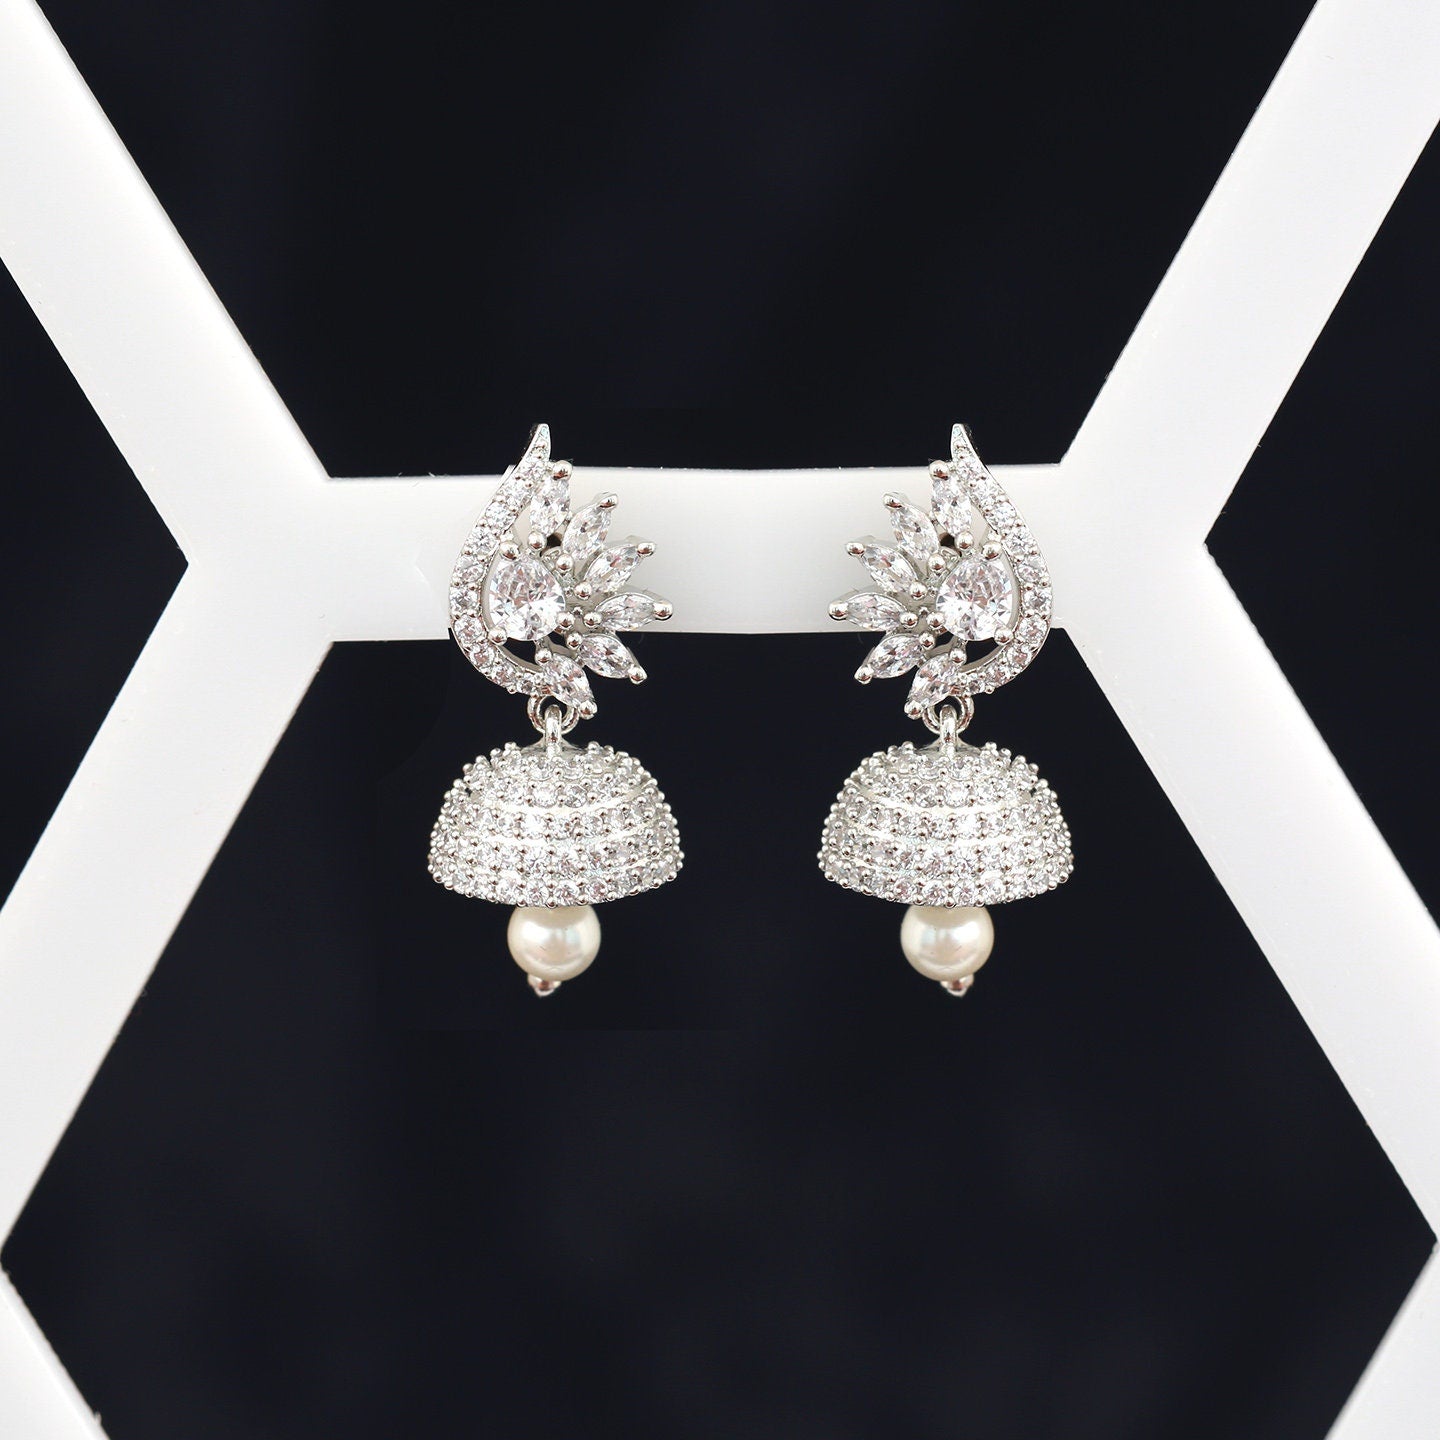 American diamond Jhumka earrings | Small CZ diamond jhumkas | Indian Earrings | Bollywood Style Silver Earrings with CZ diamond stones